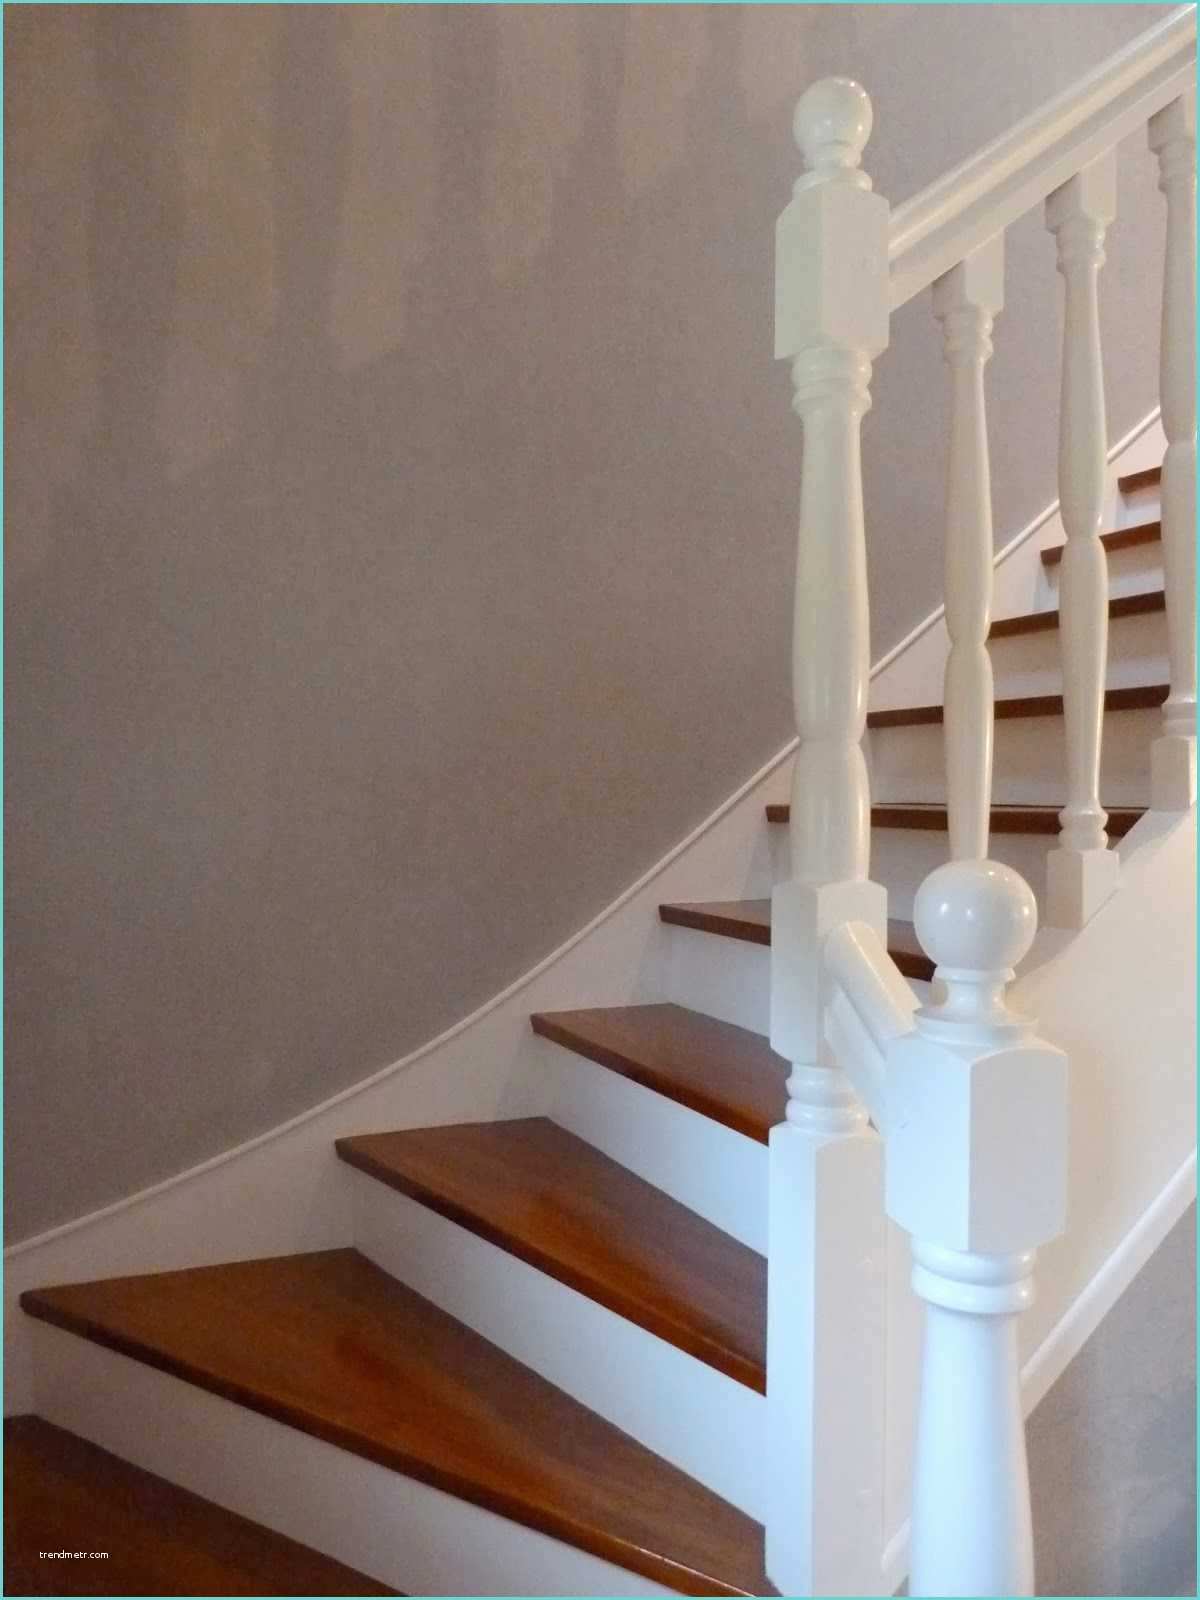 Escalier Repeint En Blanc Escalier Peint En Gris Et Blanc Avec Escalier Repeint En